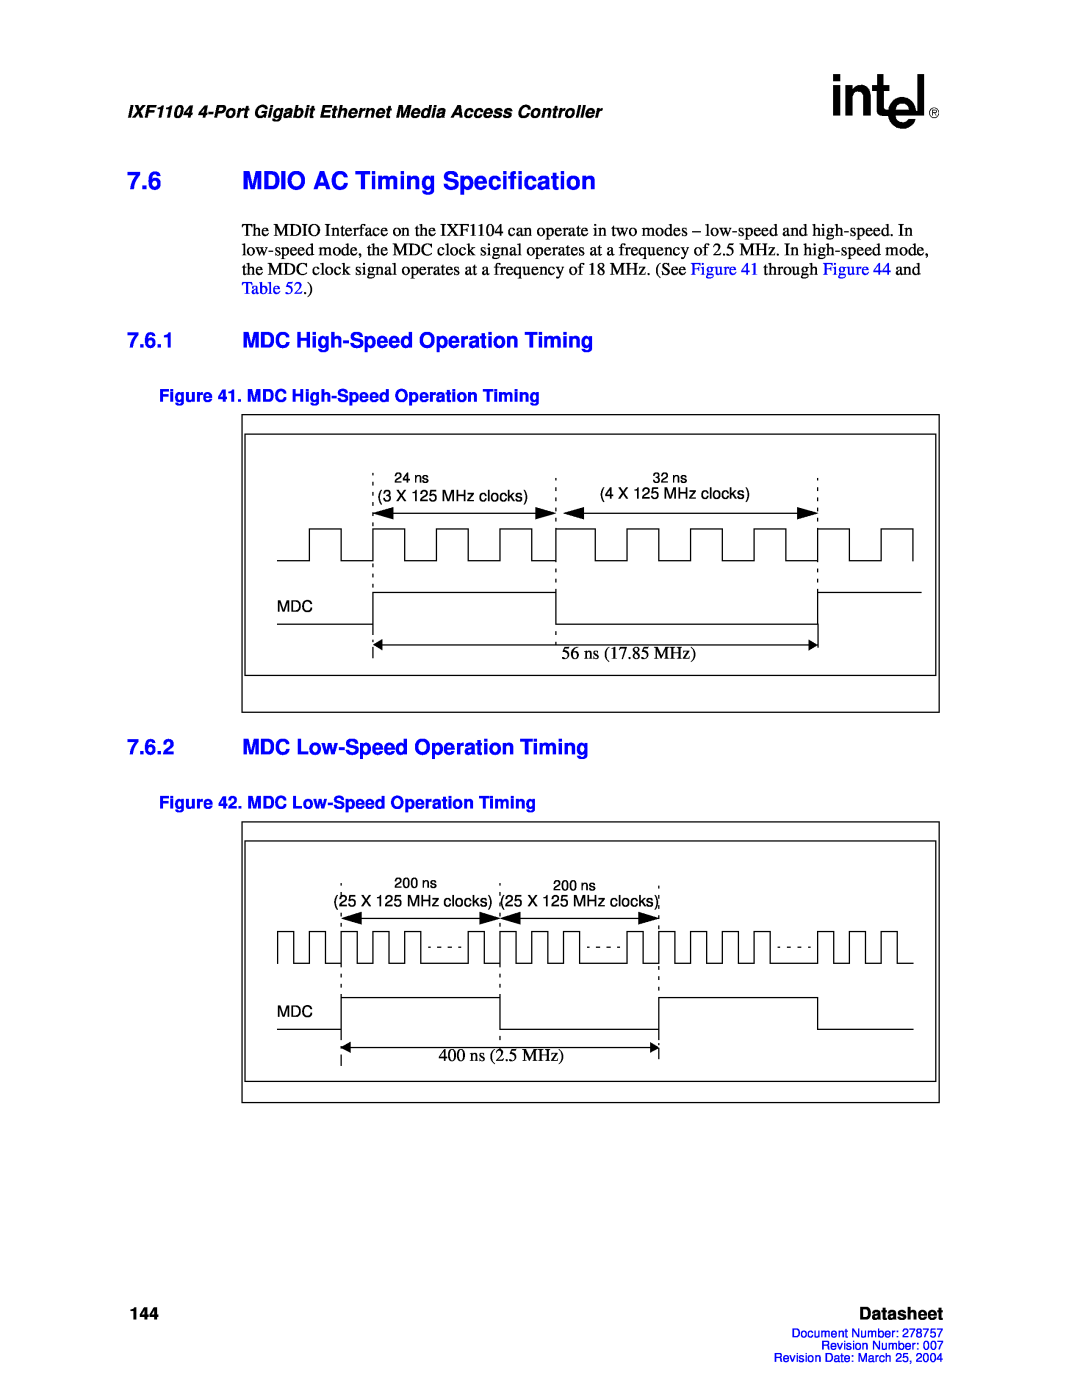 Intel IXF1104 7.6MDIO AC Timing Specification, 7.6.1MDC High-SpeedOperation Timing, 7.6.2MDC Low-SpeedOperation Timing 